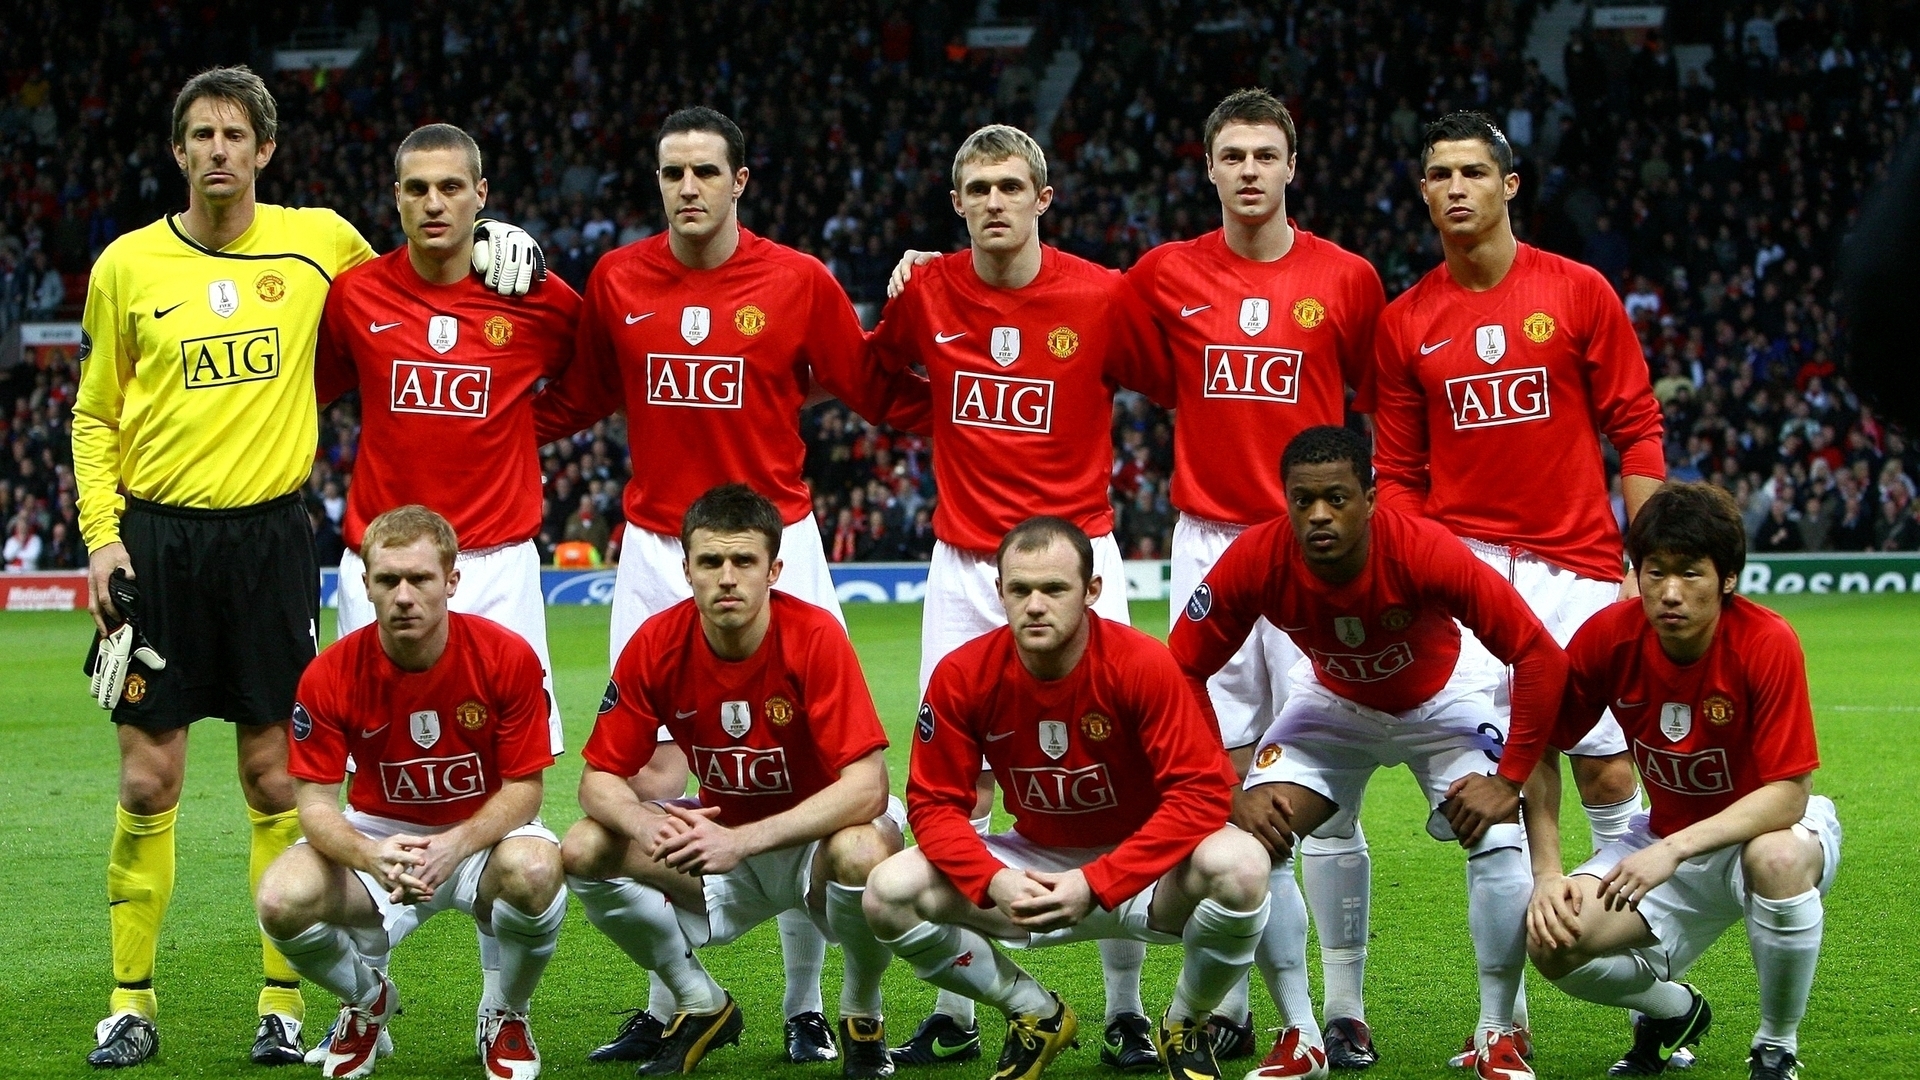 Manchester United Team for 1920 x 1080 HDTV 1080p resolution